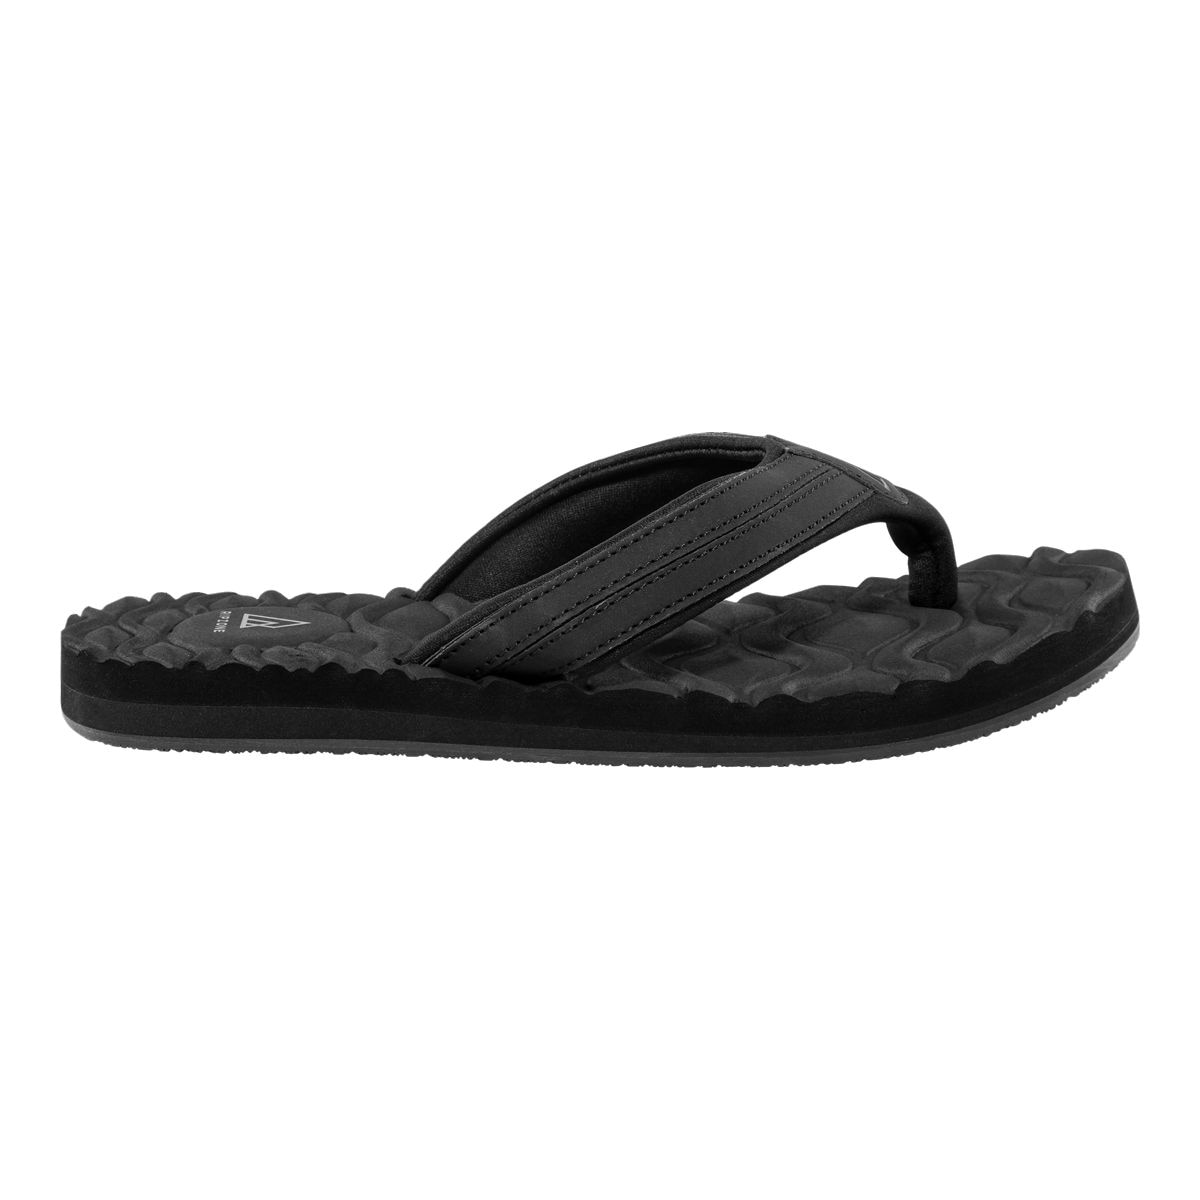 Ripzone Women's Bayside Flip Flop Sandal - Black/Pink